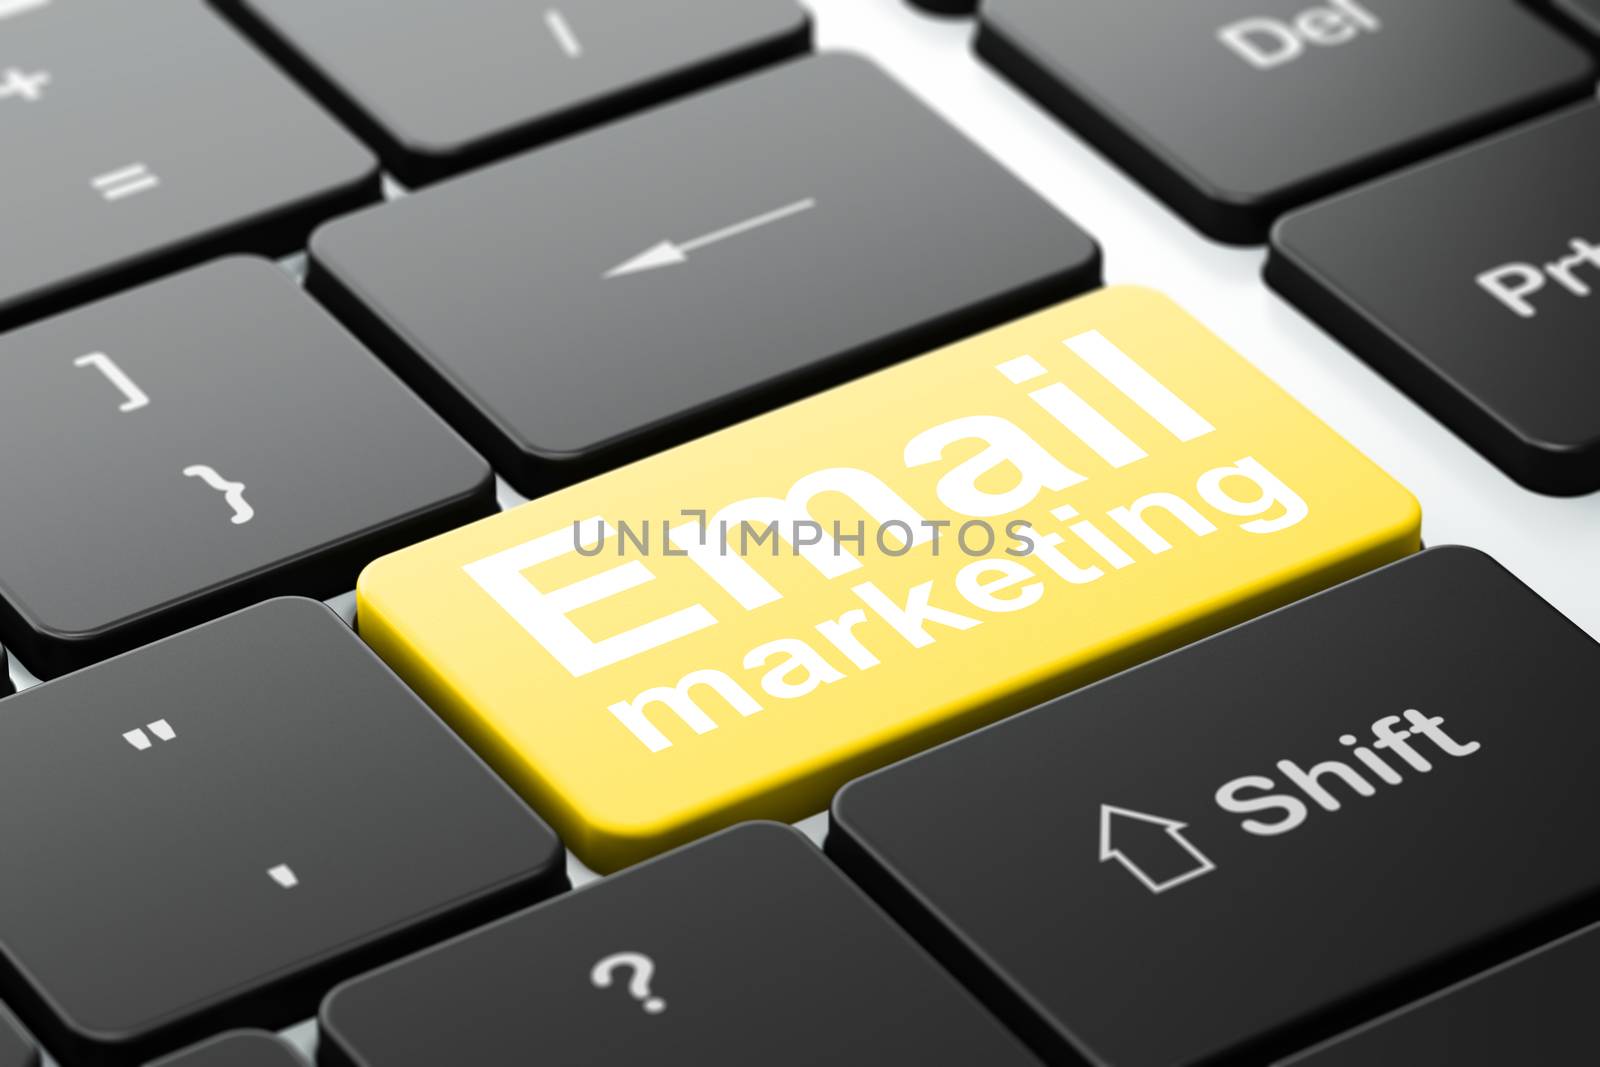 Marketing concept: Email Marketing on computer keyboard background by maxkabakov